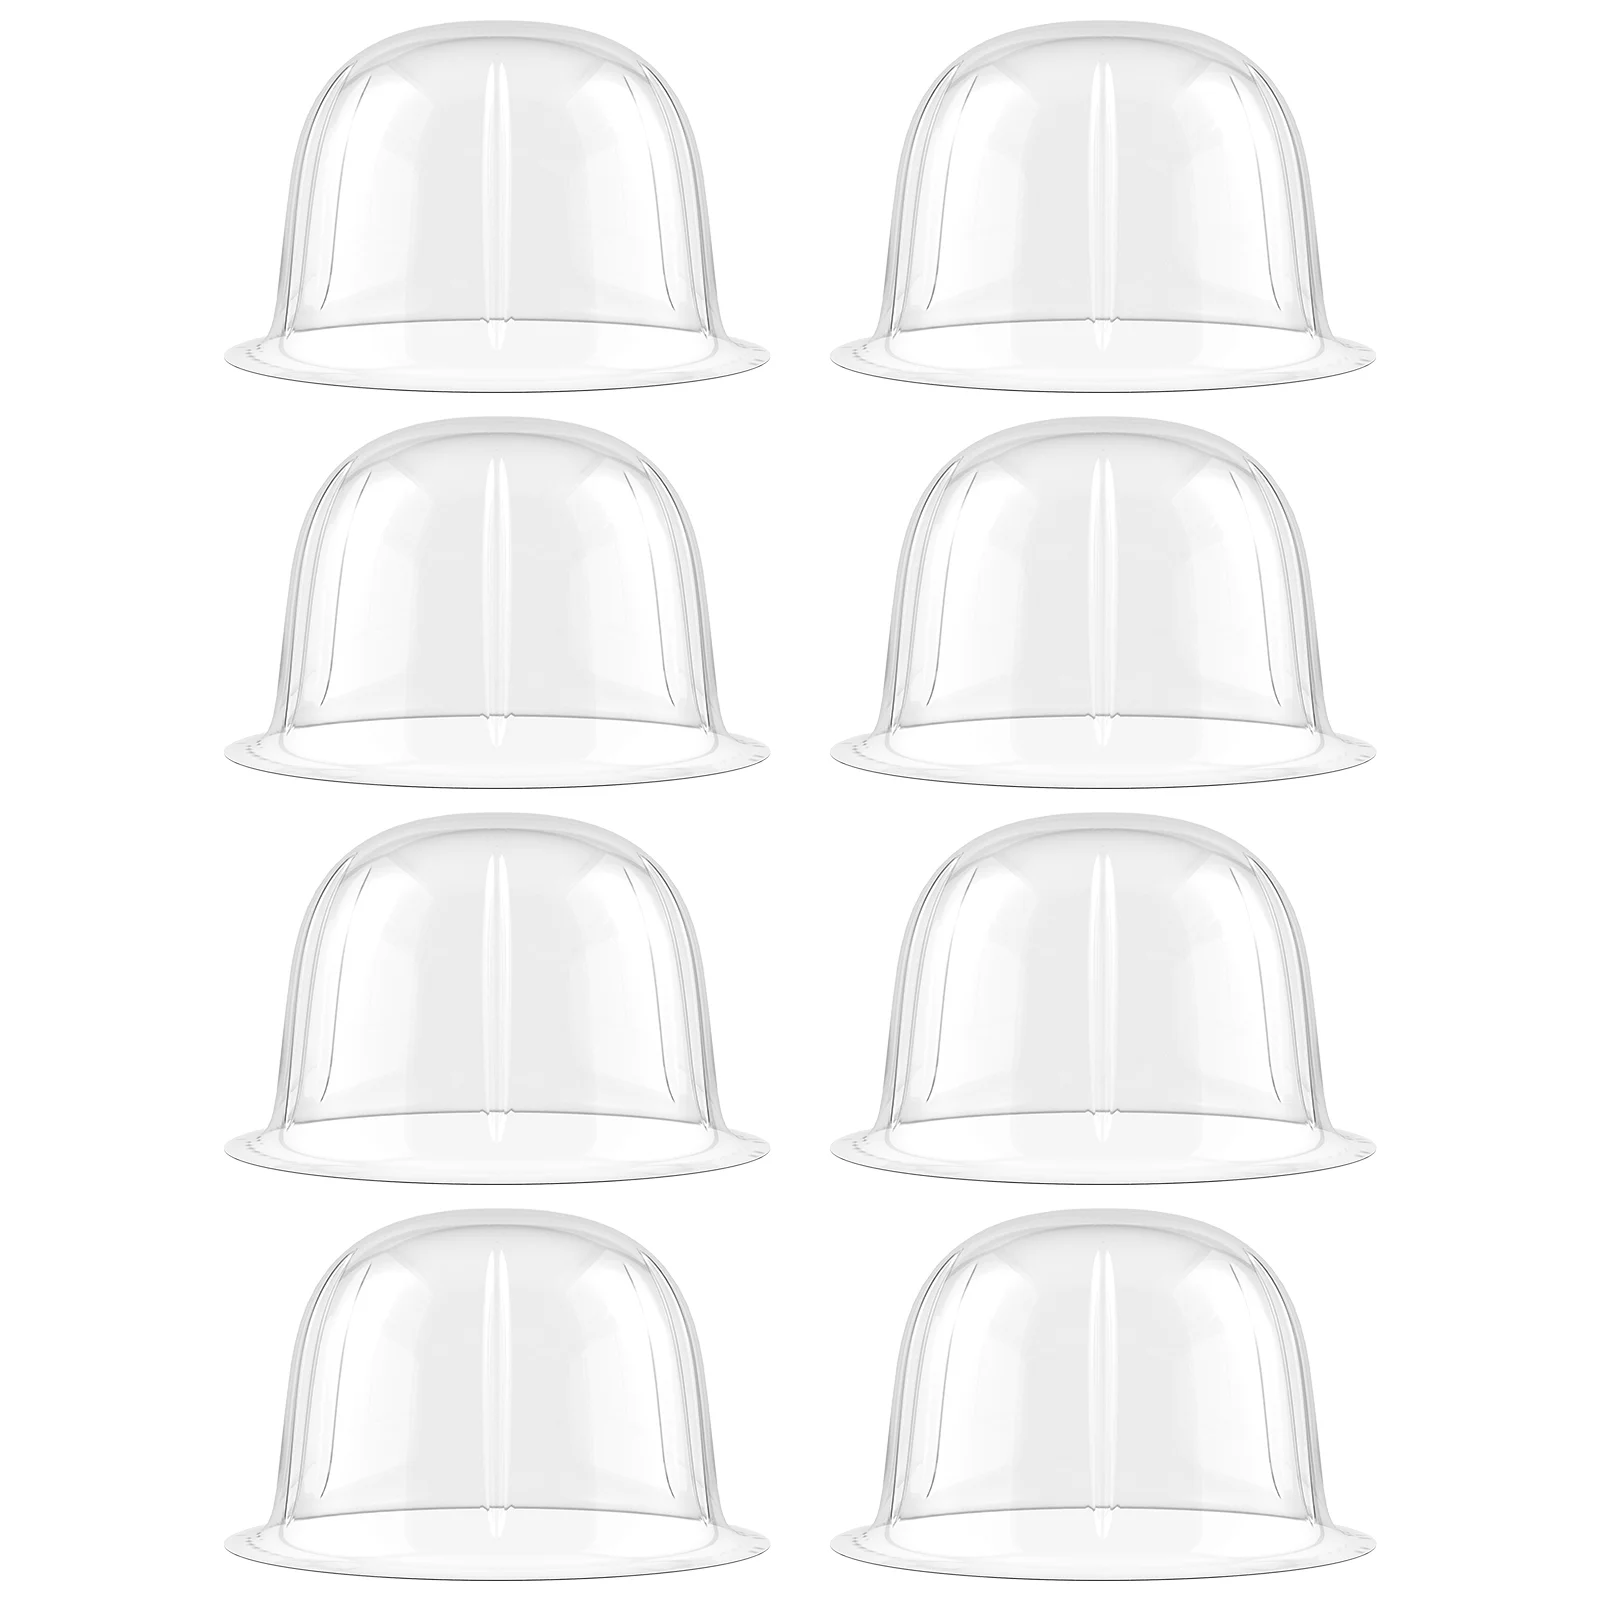 

8 Pcs Cowboy Hat Rack Shaper Insert Desktop Stand Protector Holder Wigs Hats Cap Su Display